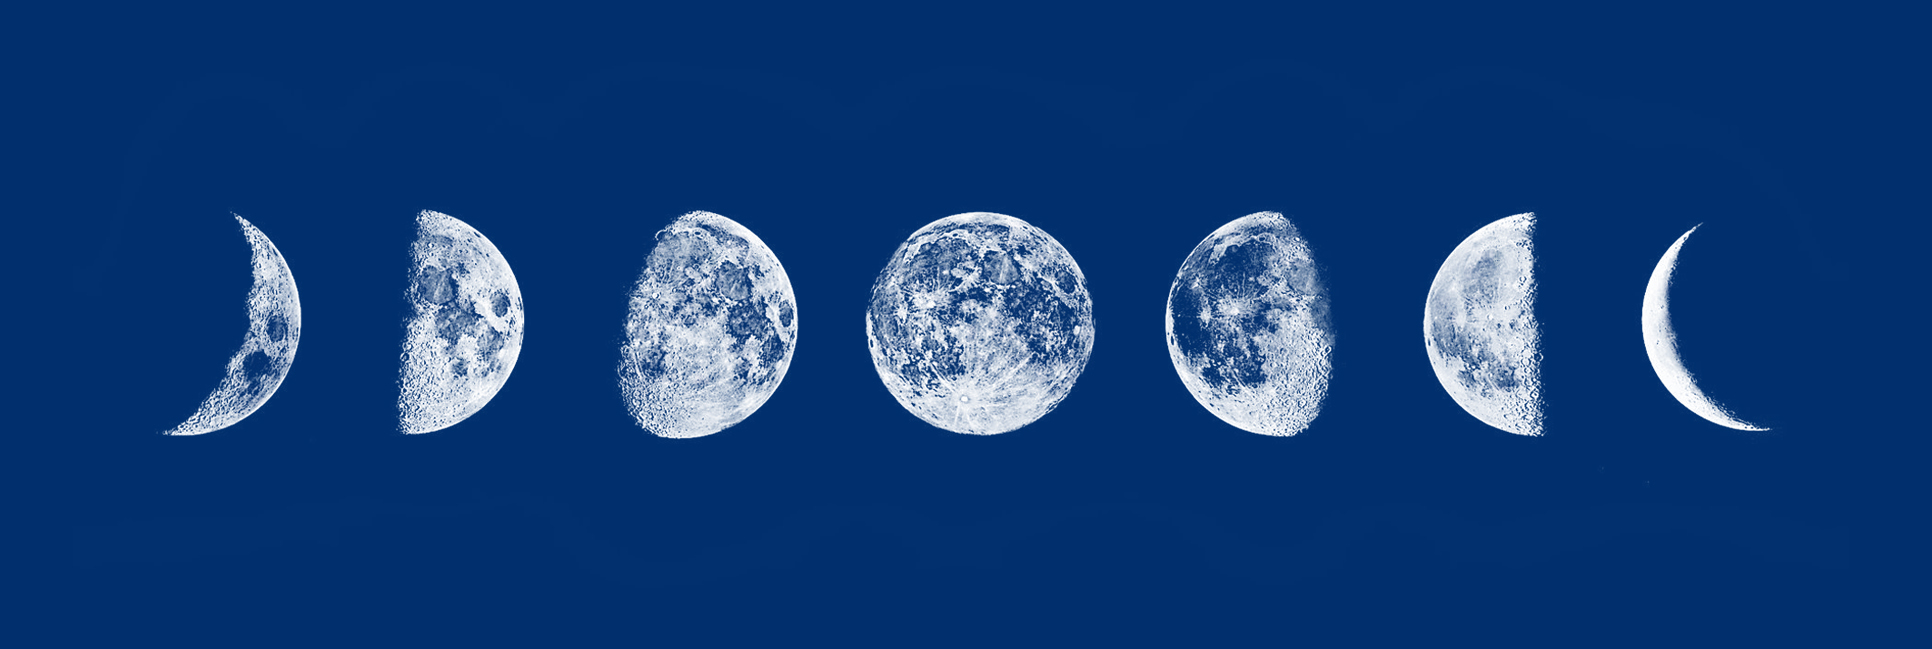 david dunlap observatory moon phases